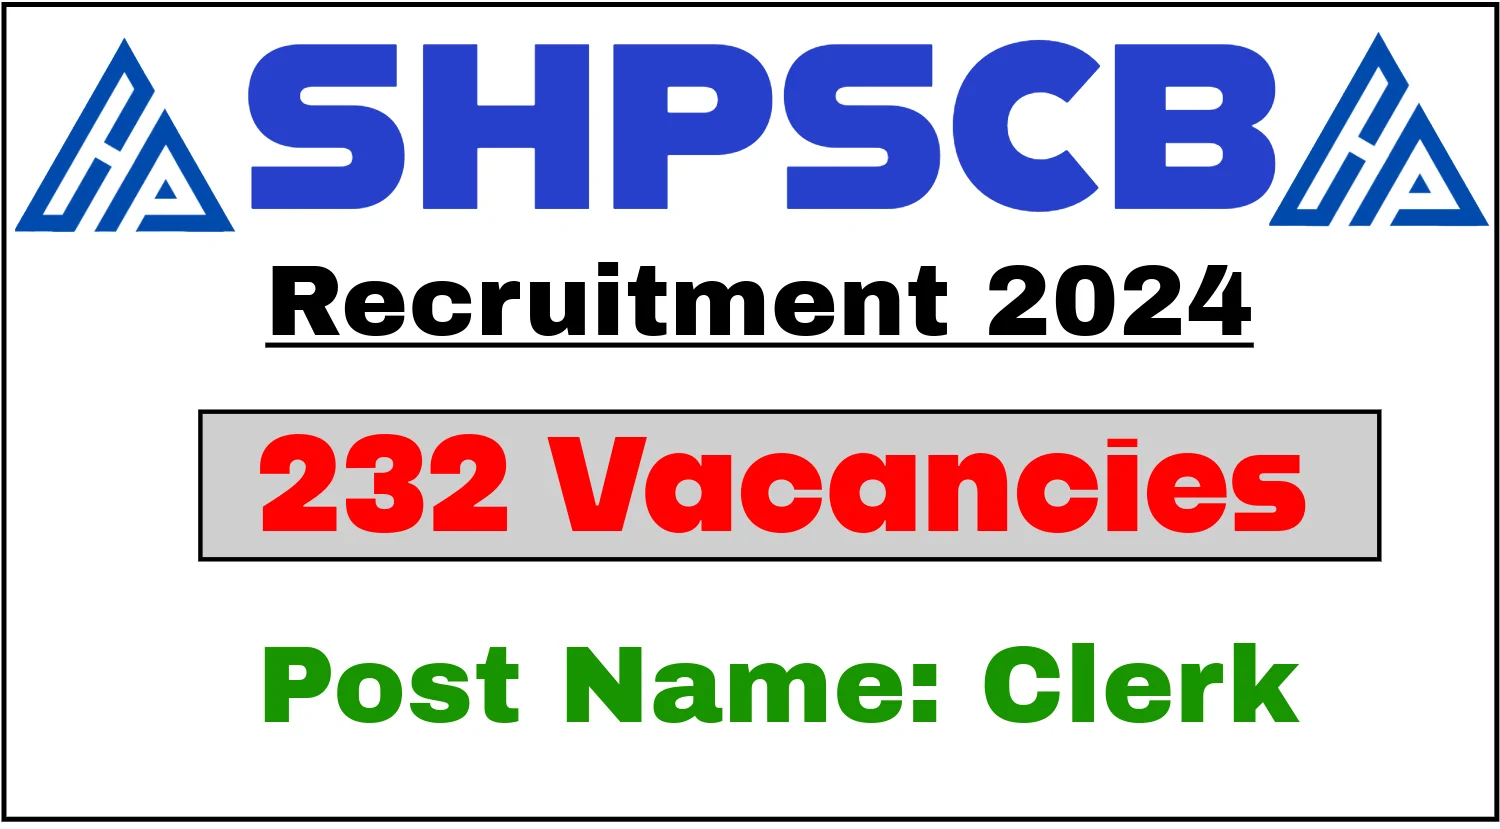 HPSCB Recruitment 2024